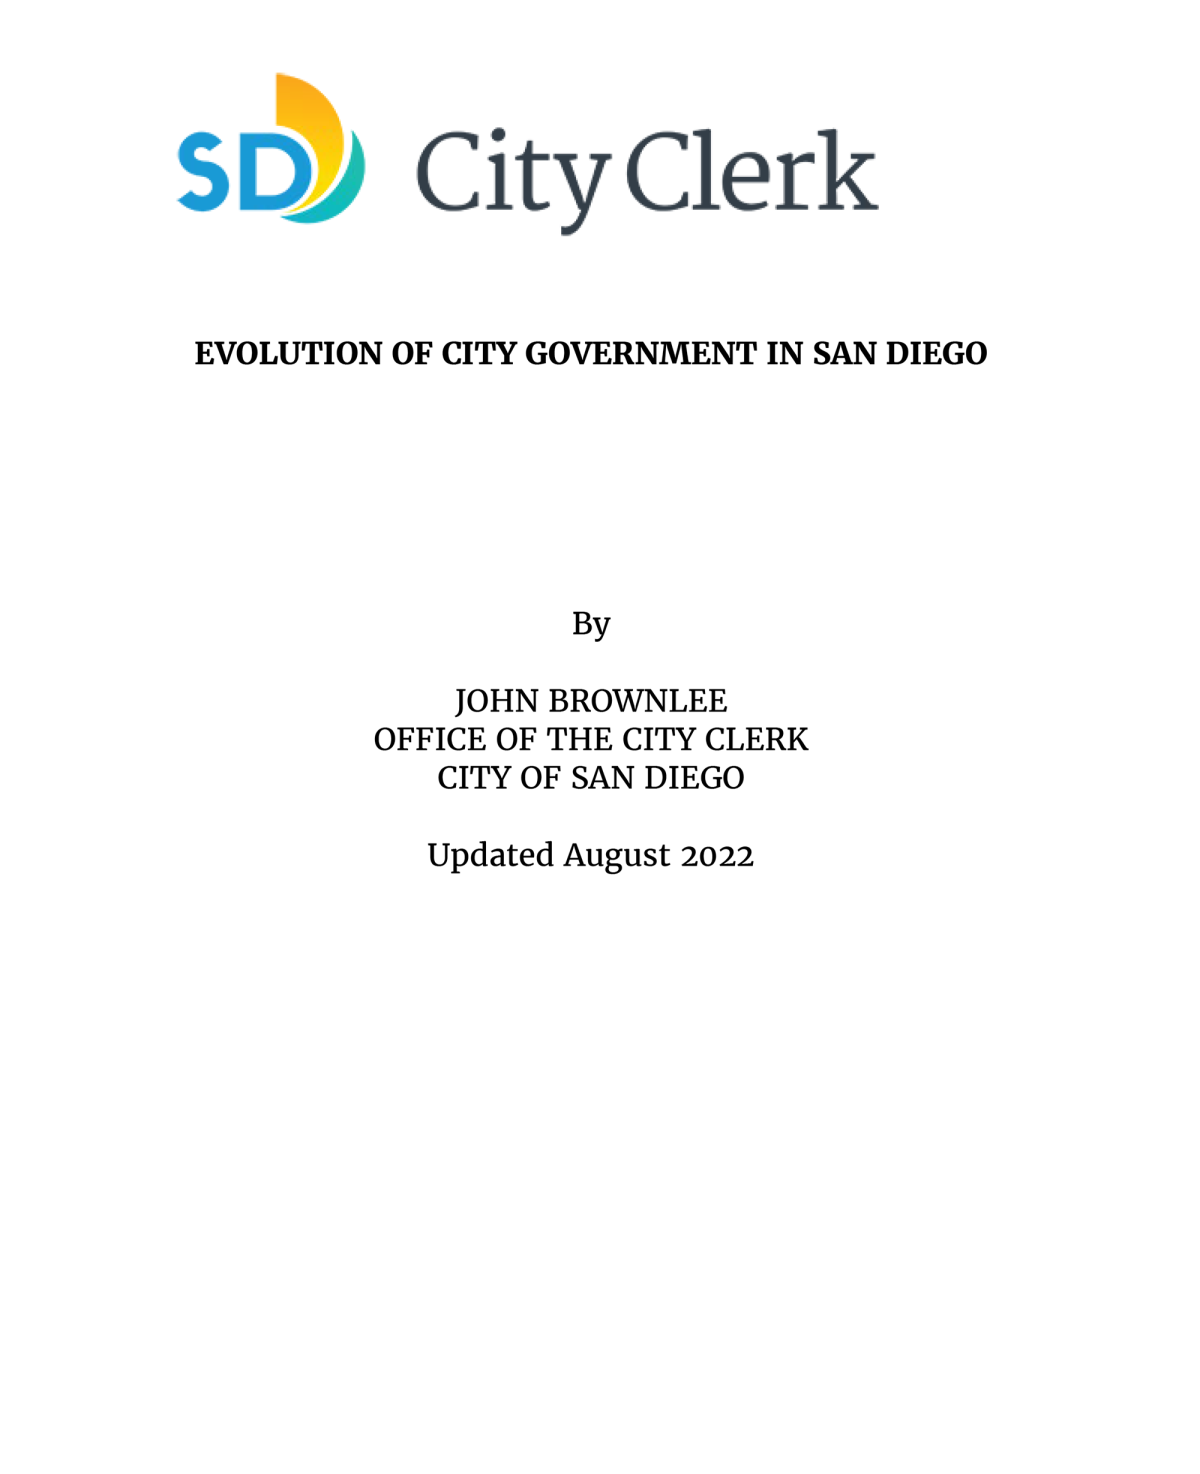 Evolution of City Government